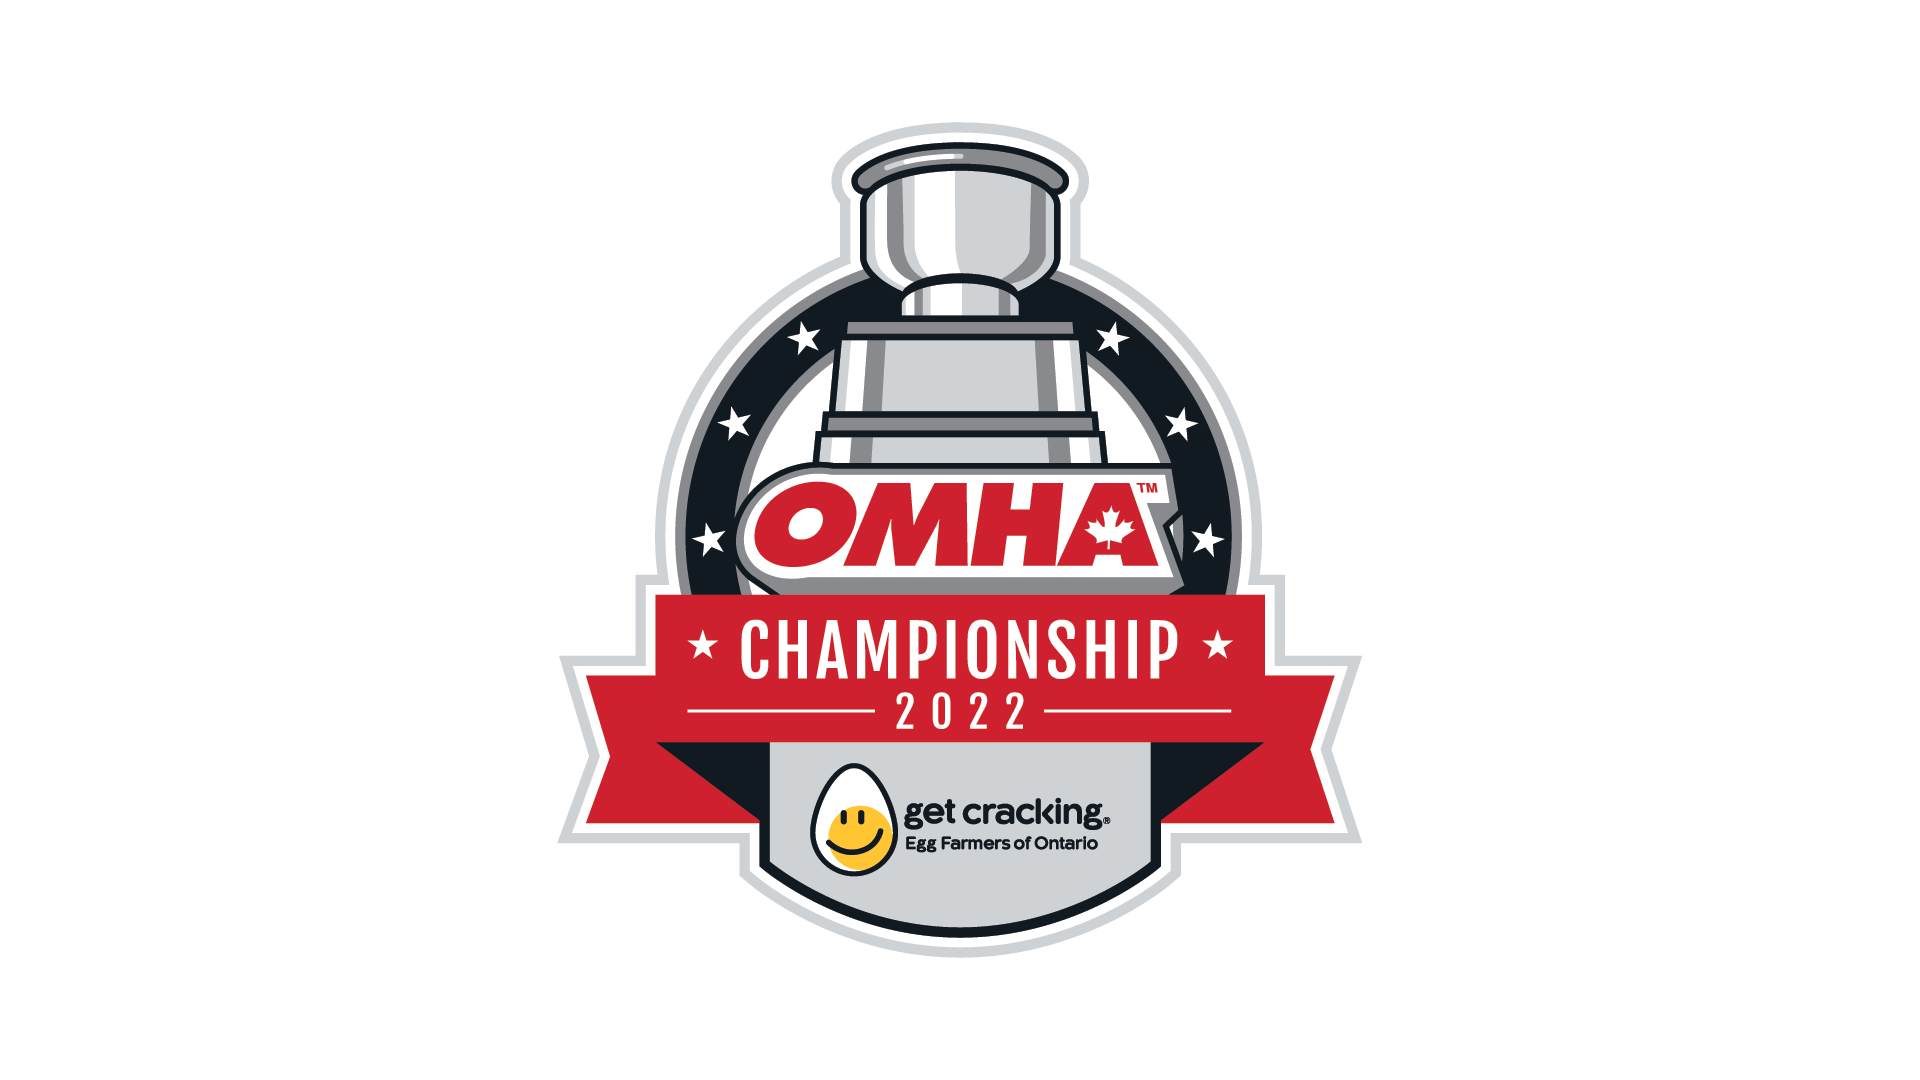 OMHA Provincial Championship 2022